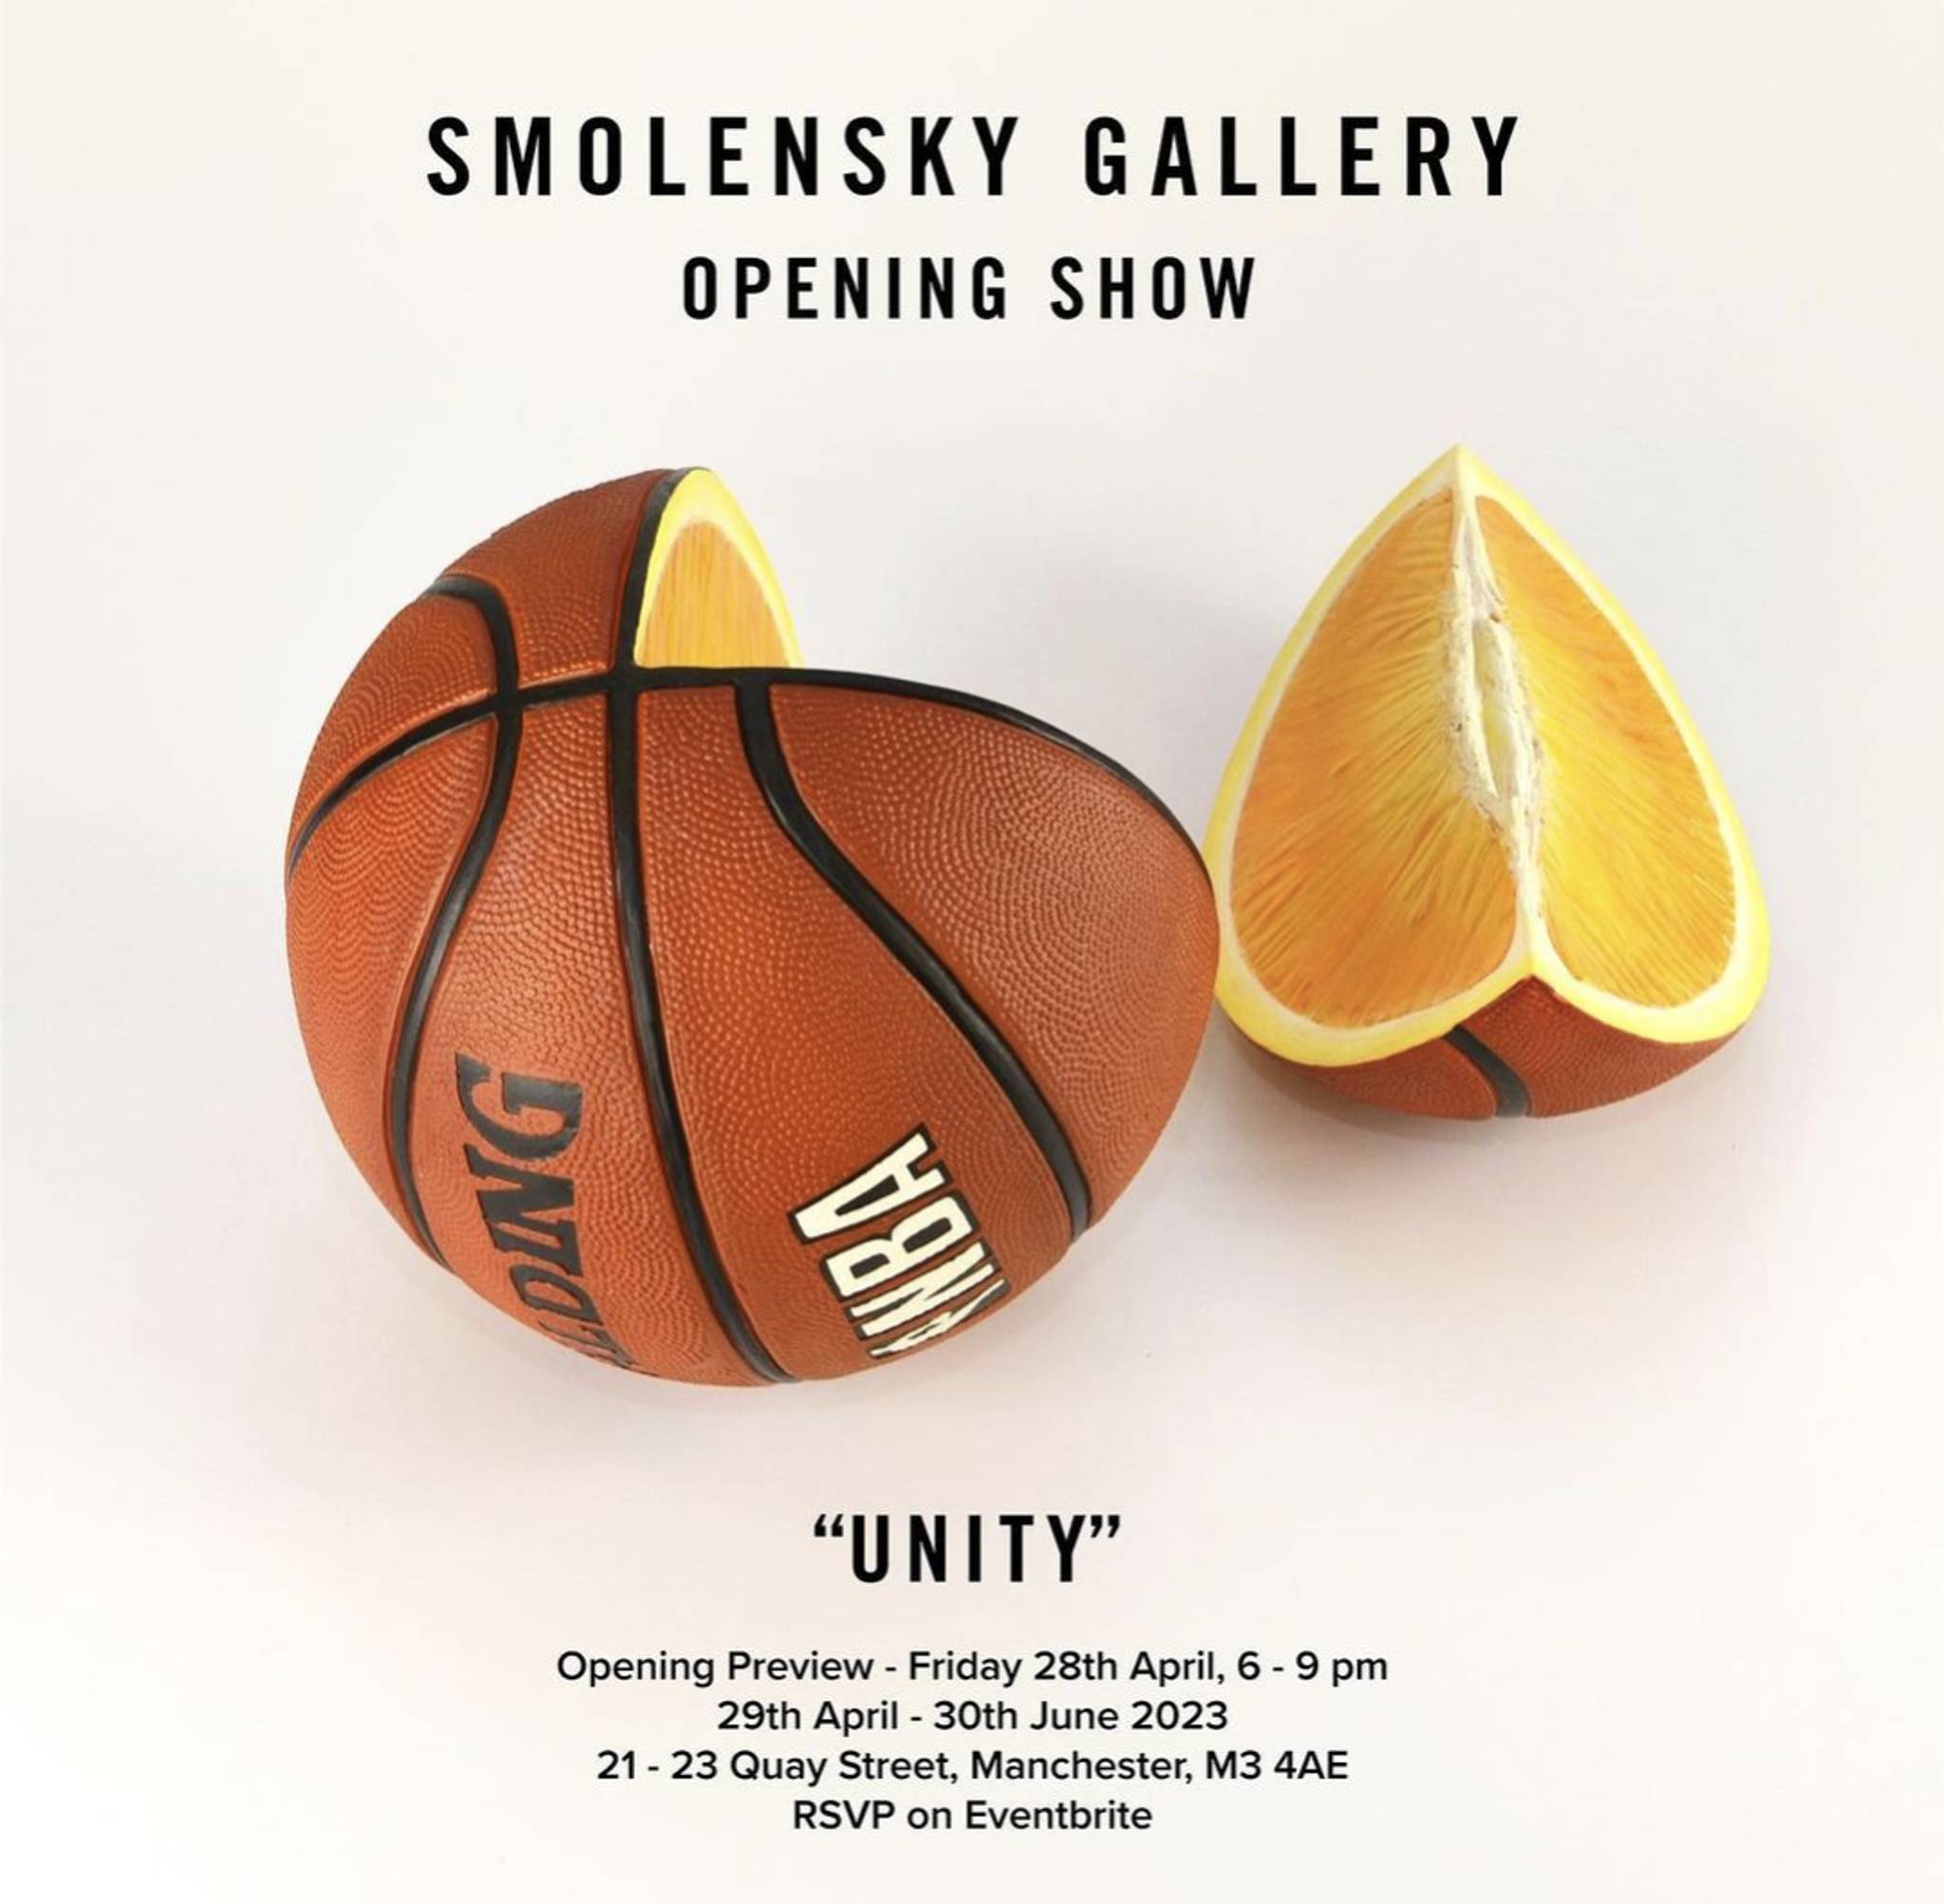 &mdash;Smolensky Gallery